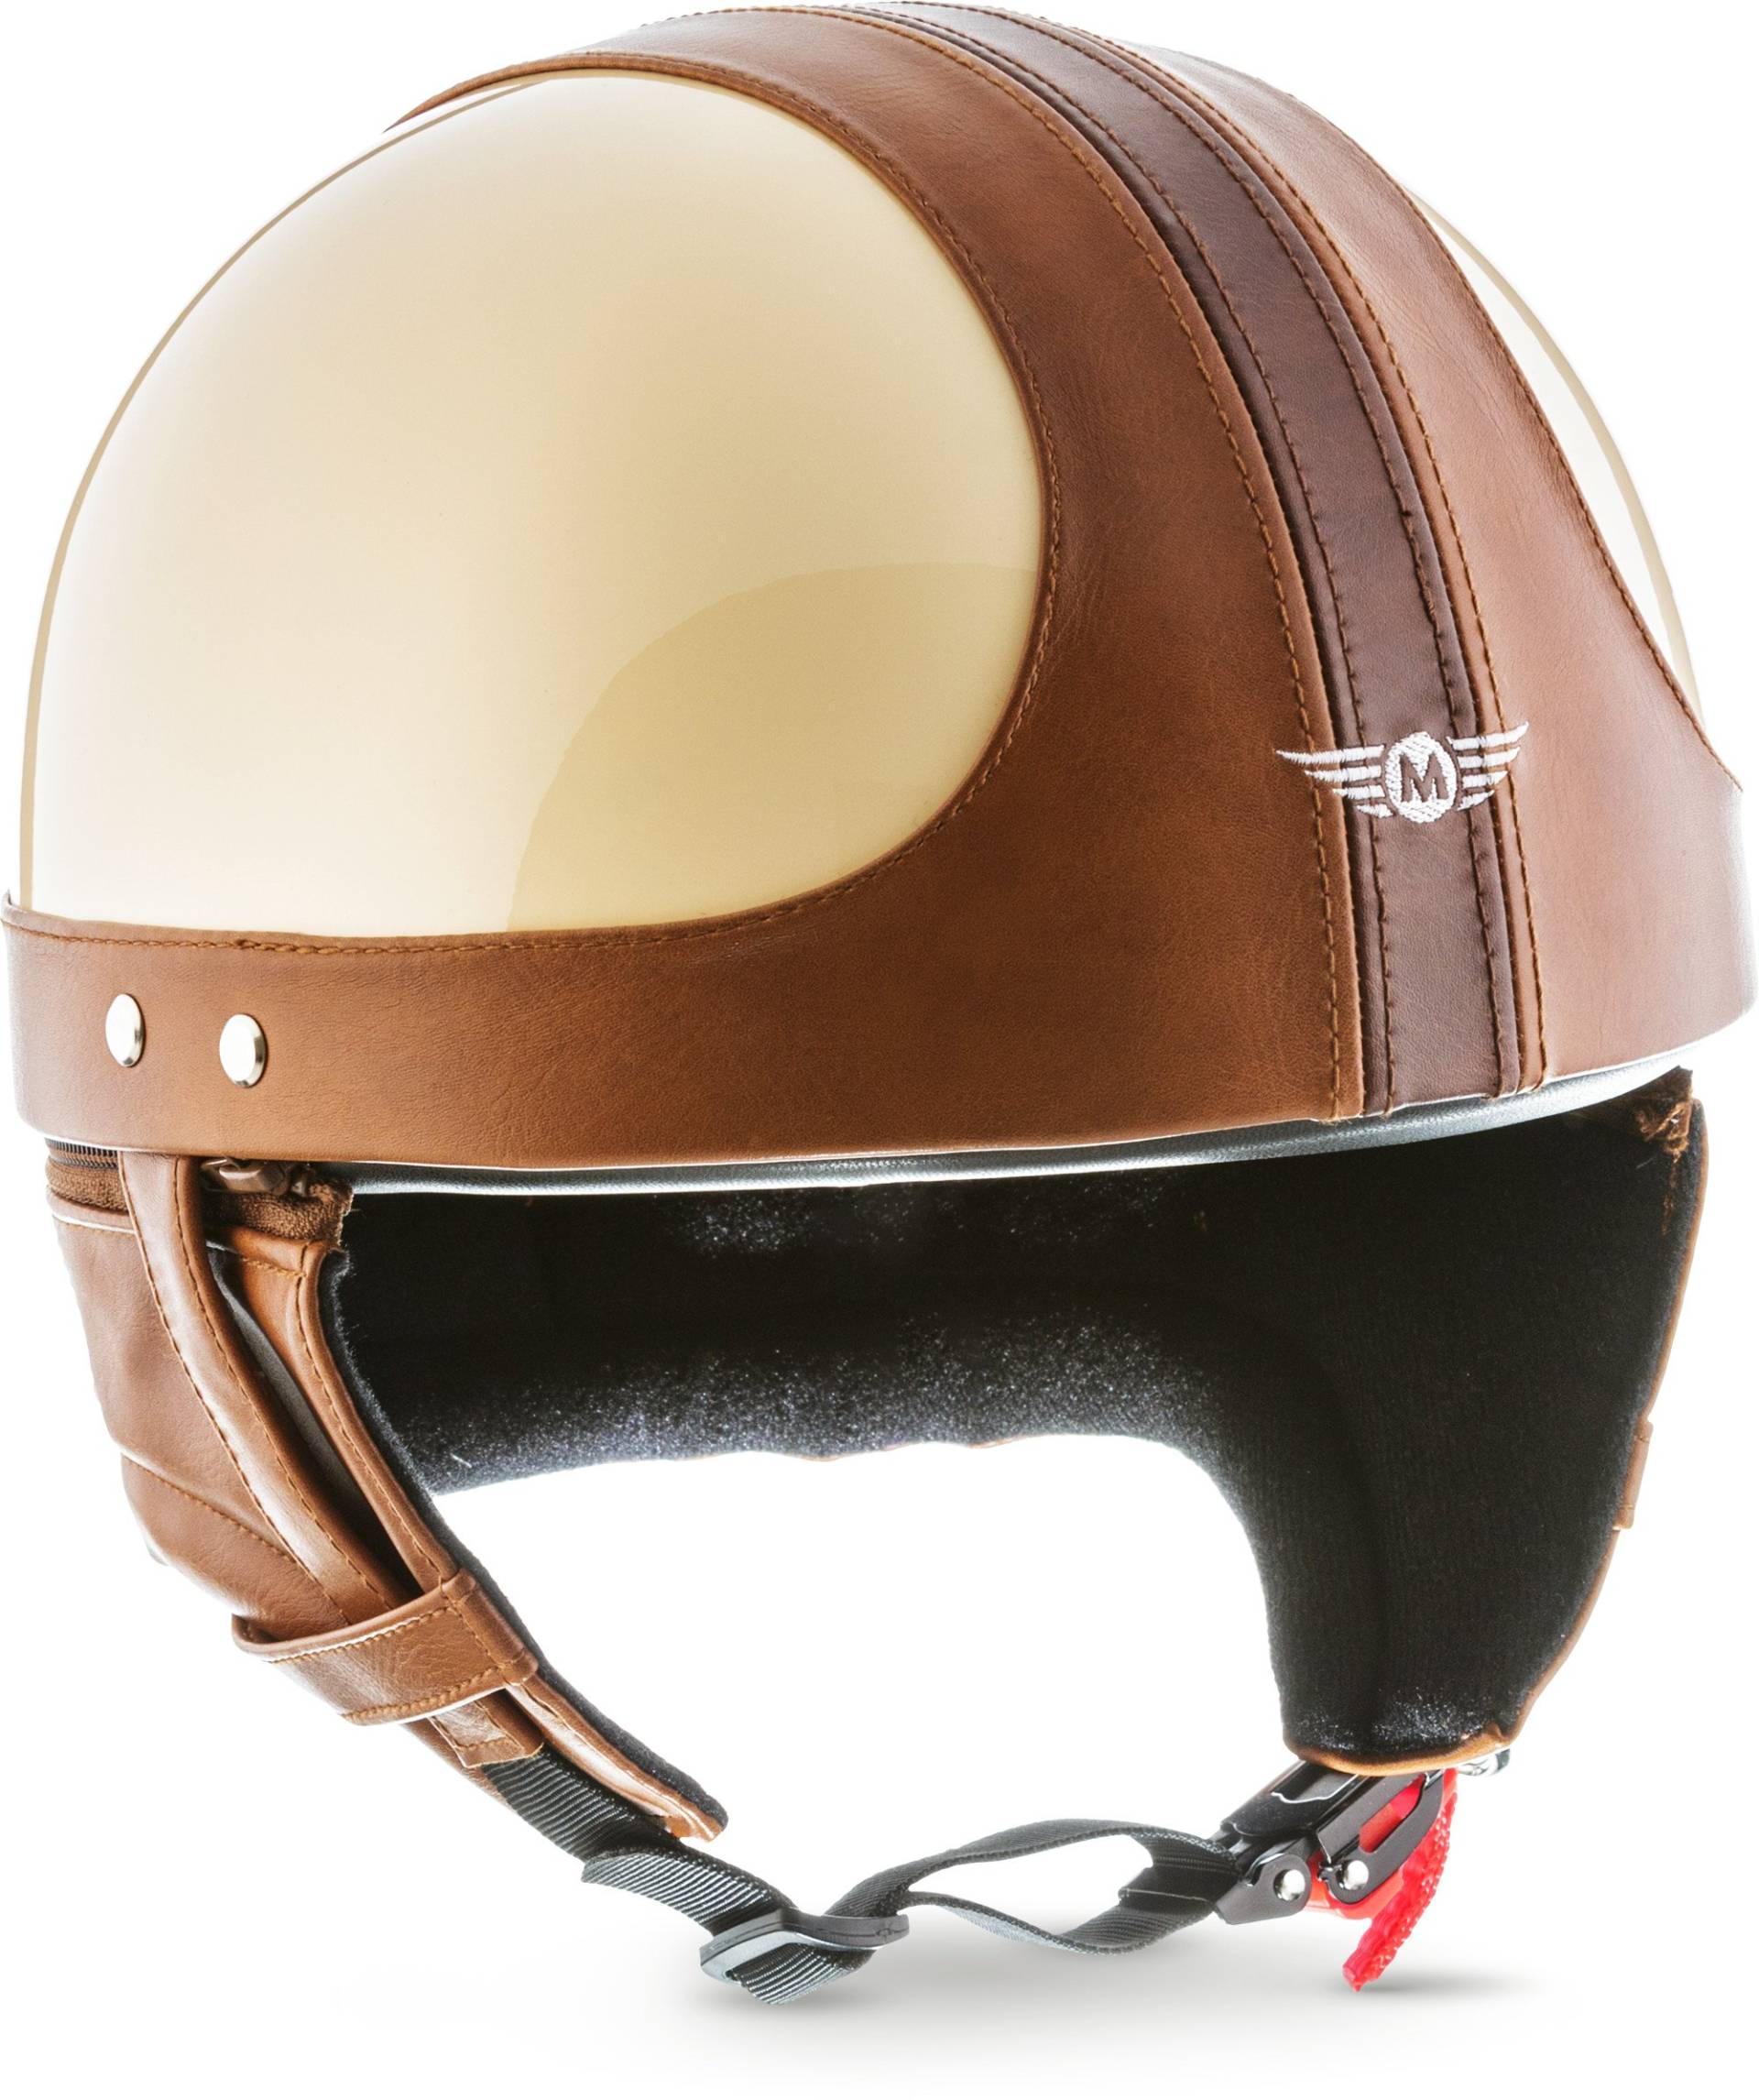 Moto Helmets® D22 „Vintage Creme“ · Brain-Cap · Halbschale Jet-Helm Motorrad-Helm Bobber · Fiberglas Schnellverschluss SlimShell Tasche S (55-56cm) von Moto Helmets